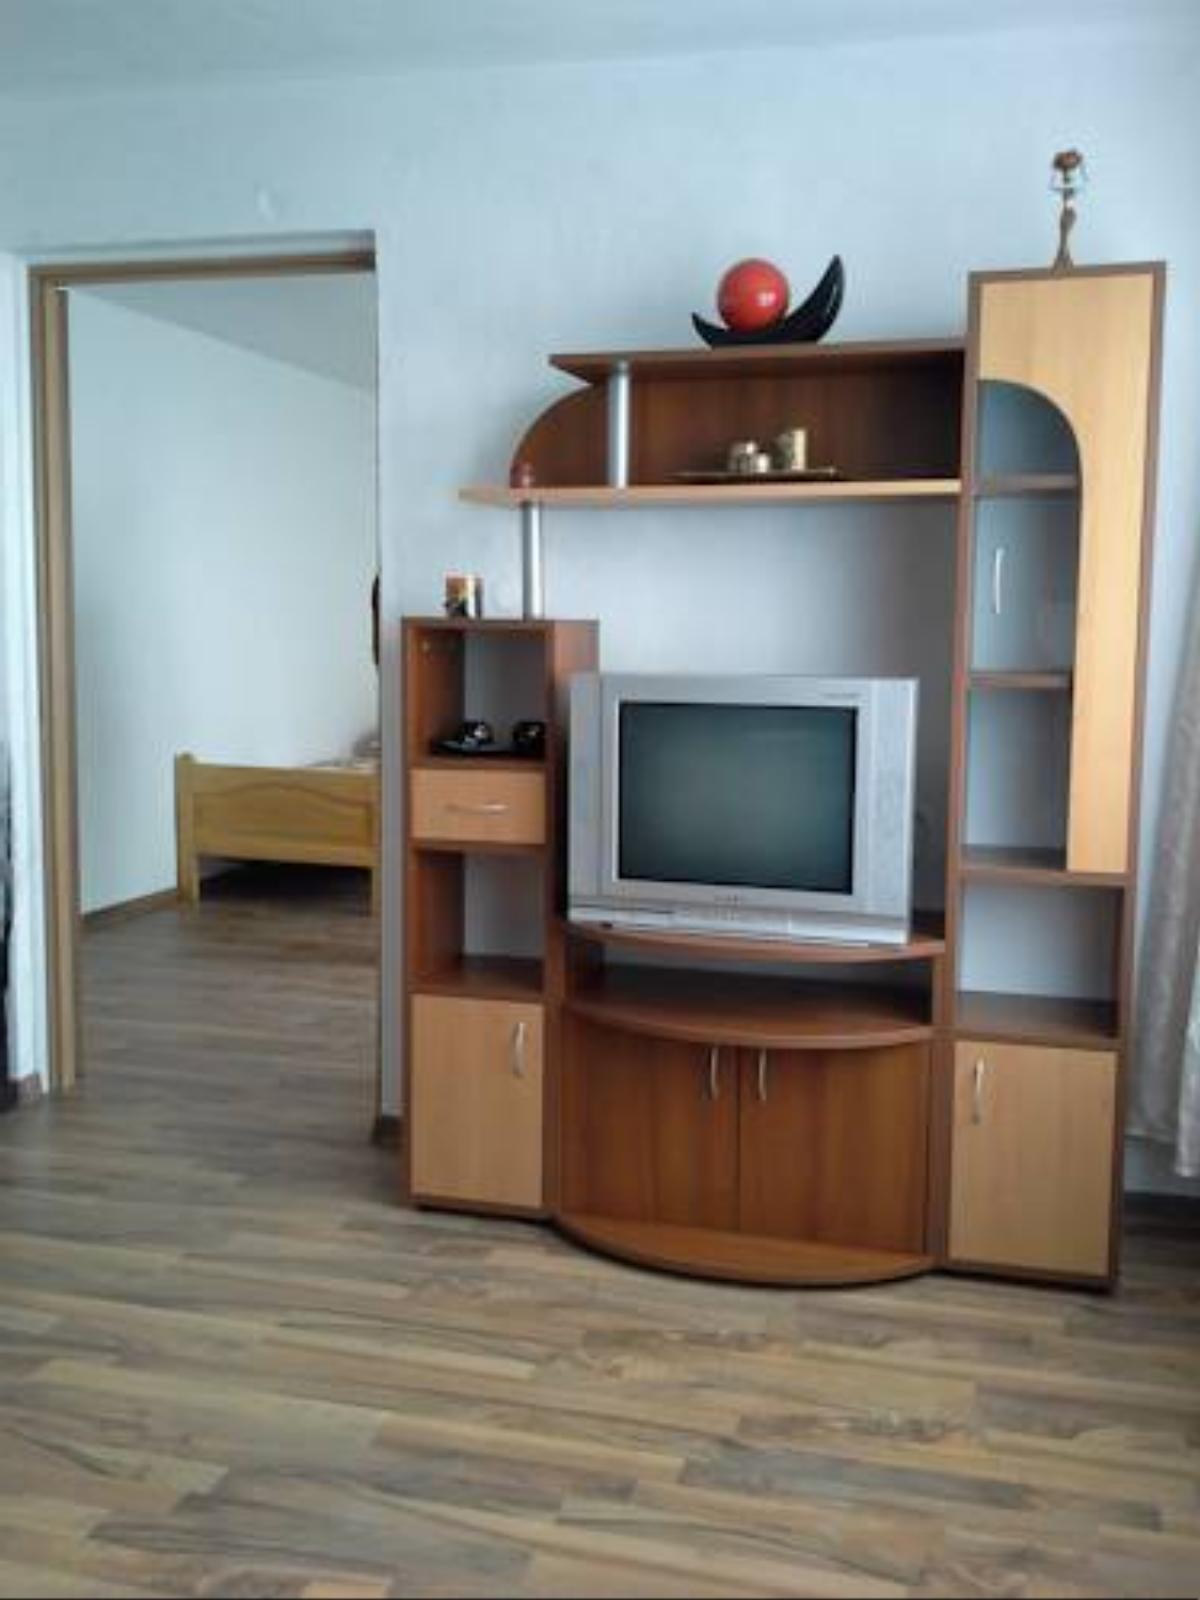 Morski Rai Apartments Hotel Byala Ruse Bulgaria